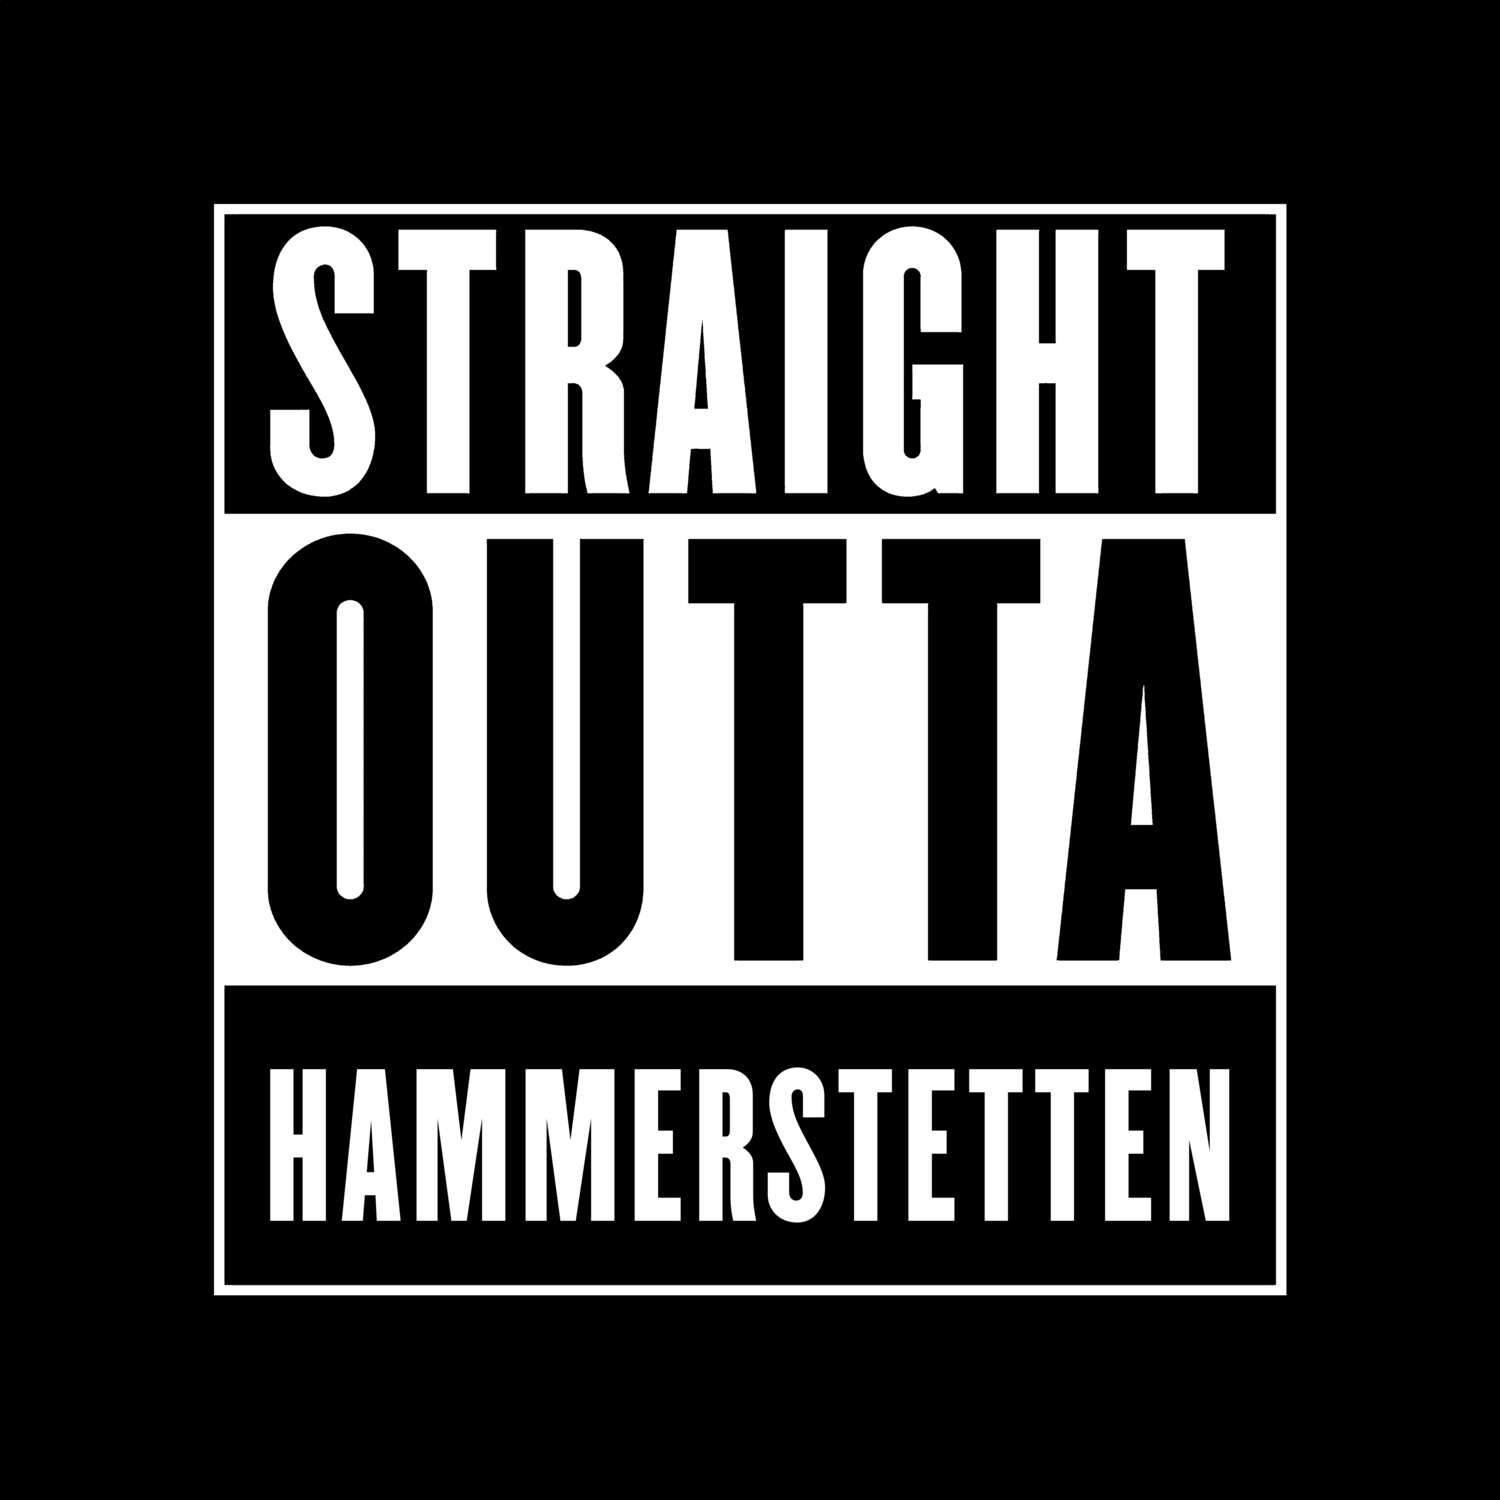 Hammerstetten T-Shirt »Straight Outta«